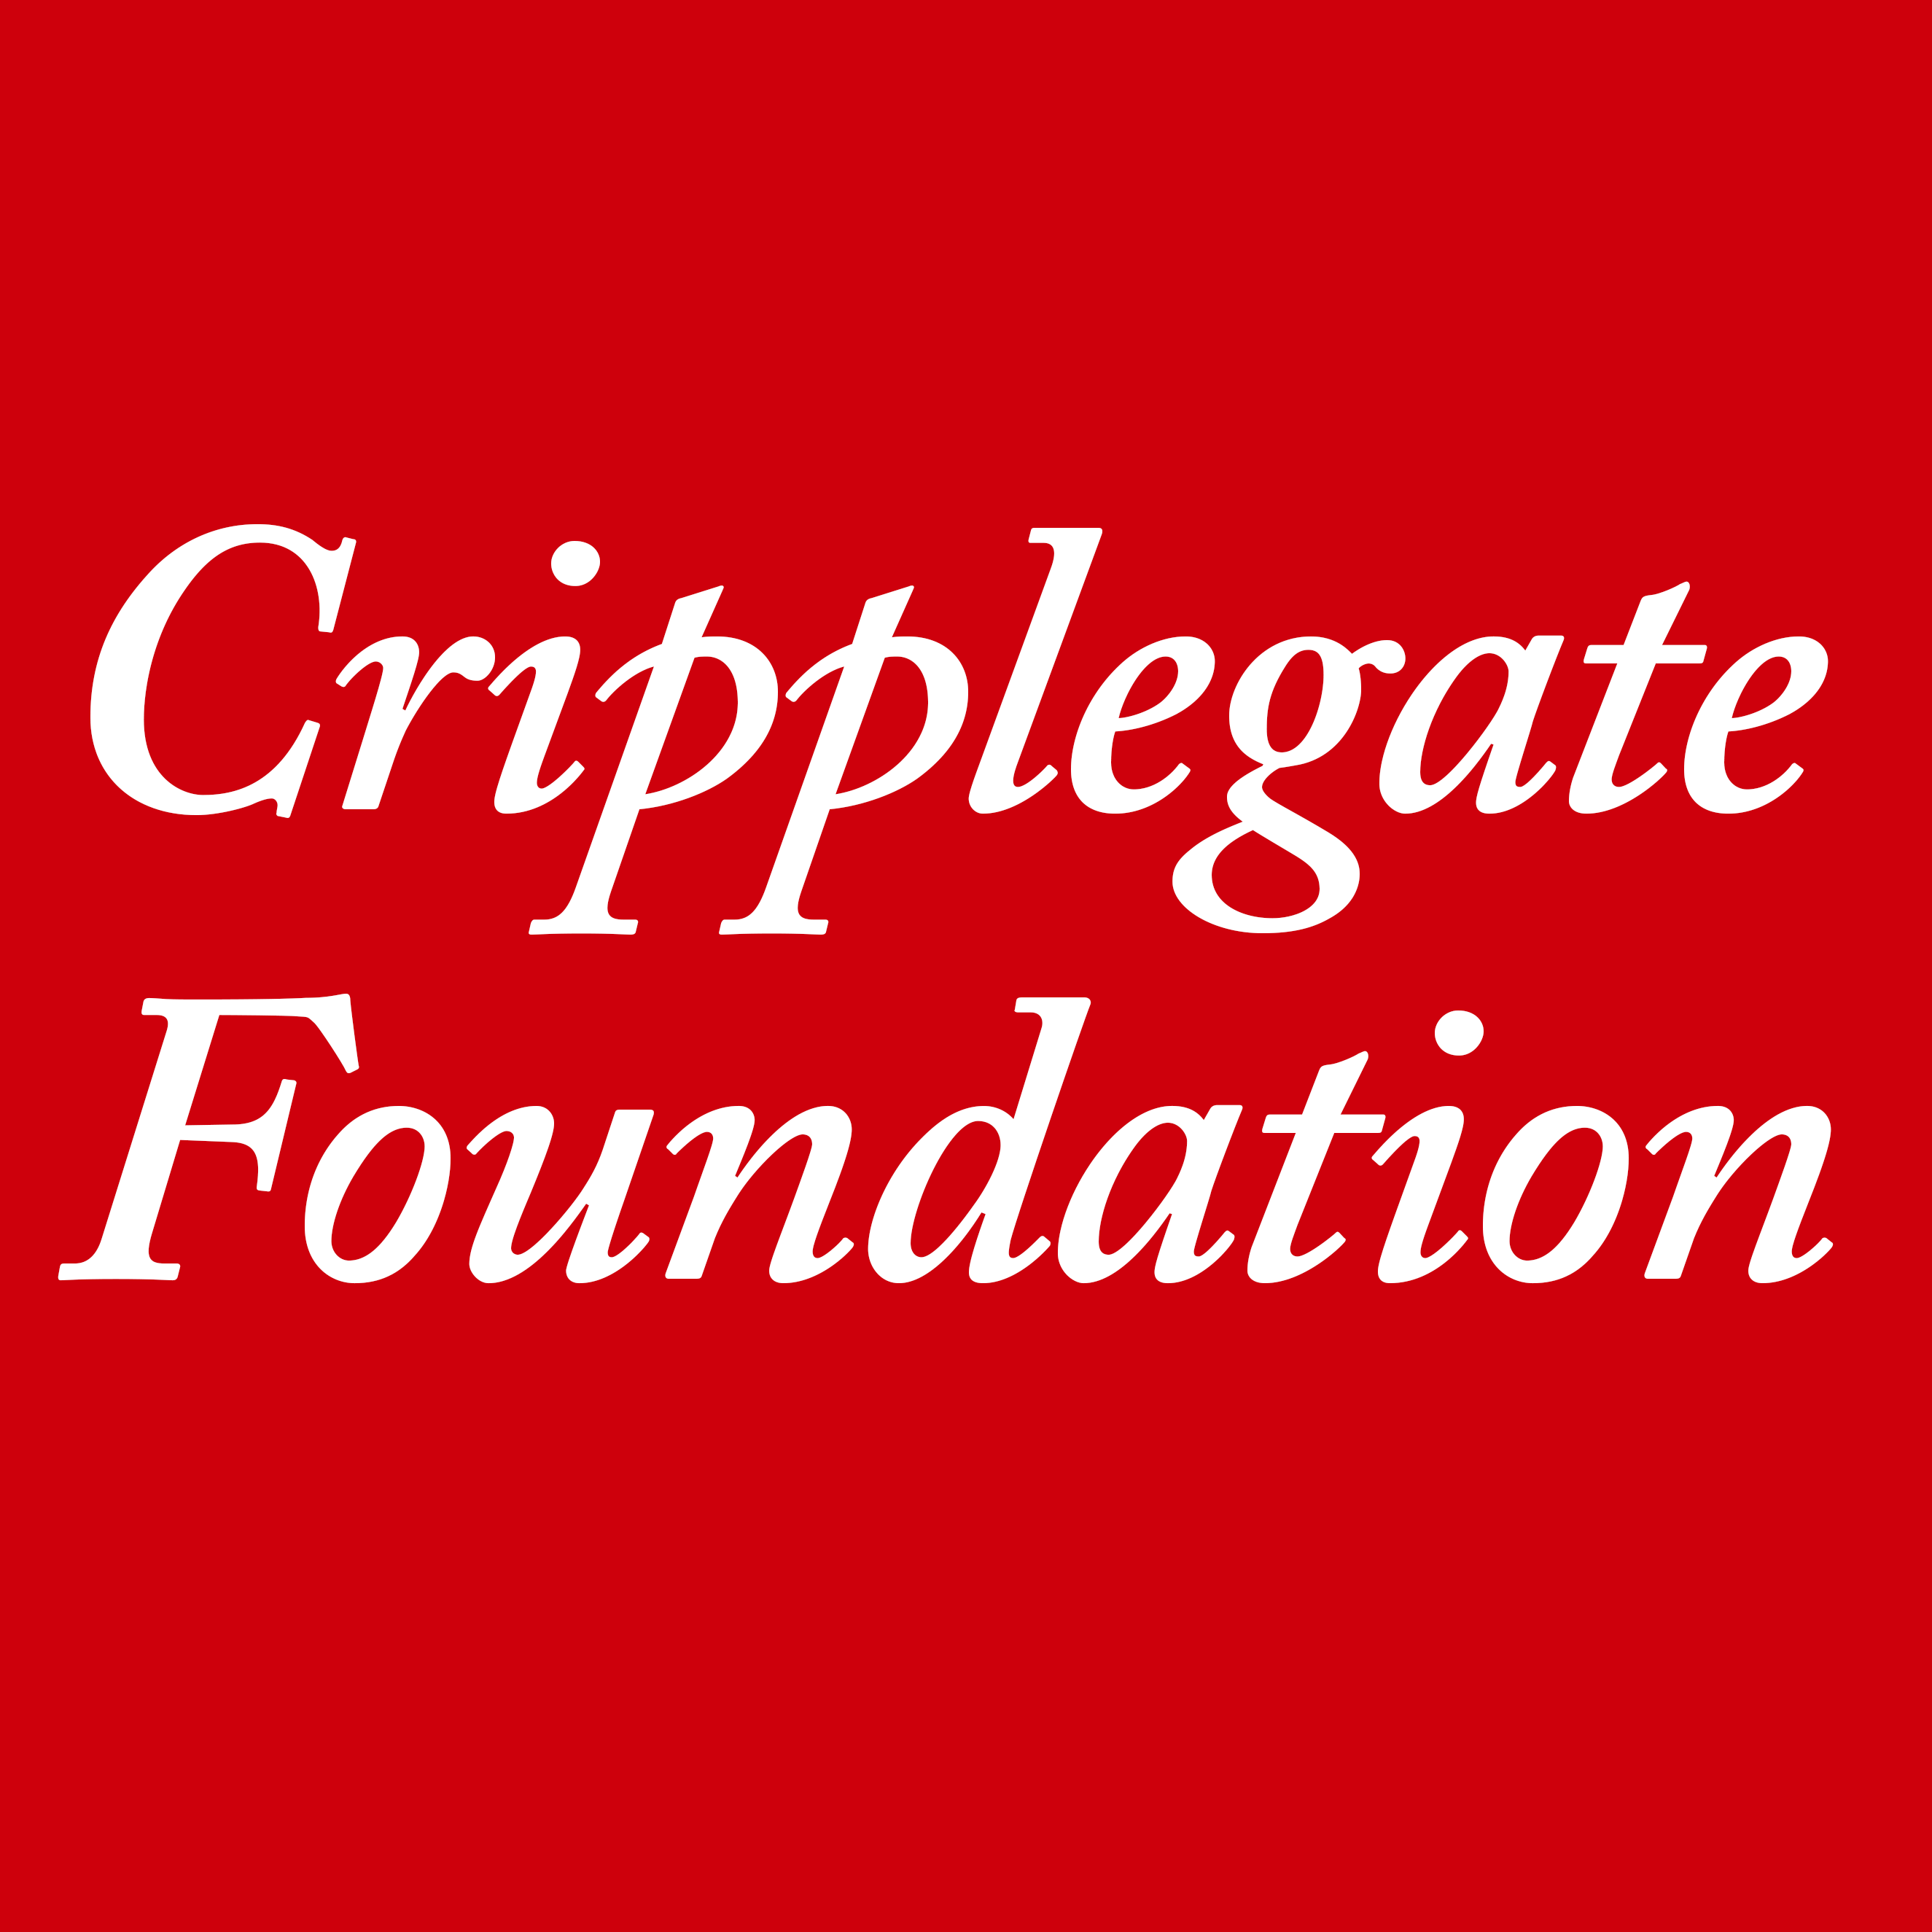 Cripplegate Foundation